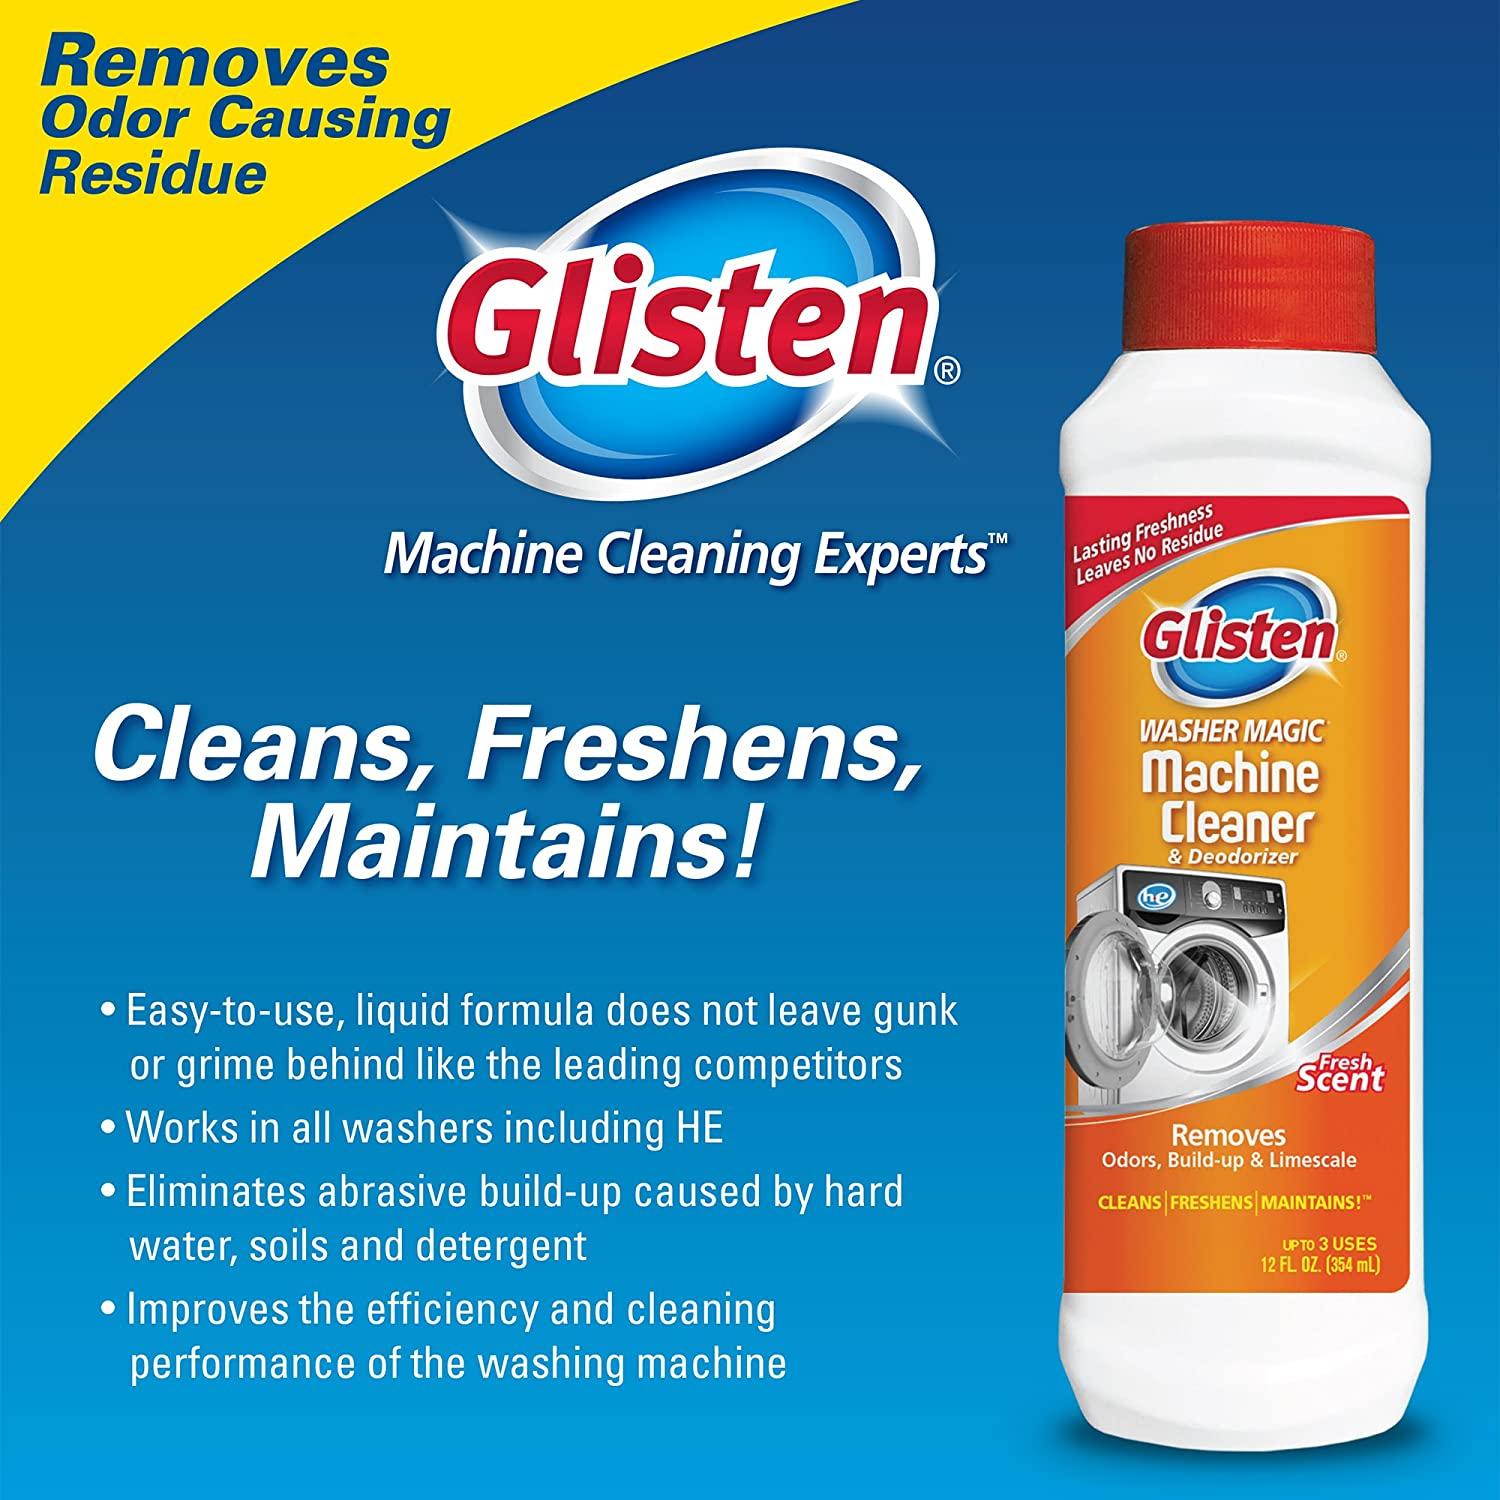 Glisten Washer Magic Machine Cleaner, Remove Odors and Buildup